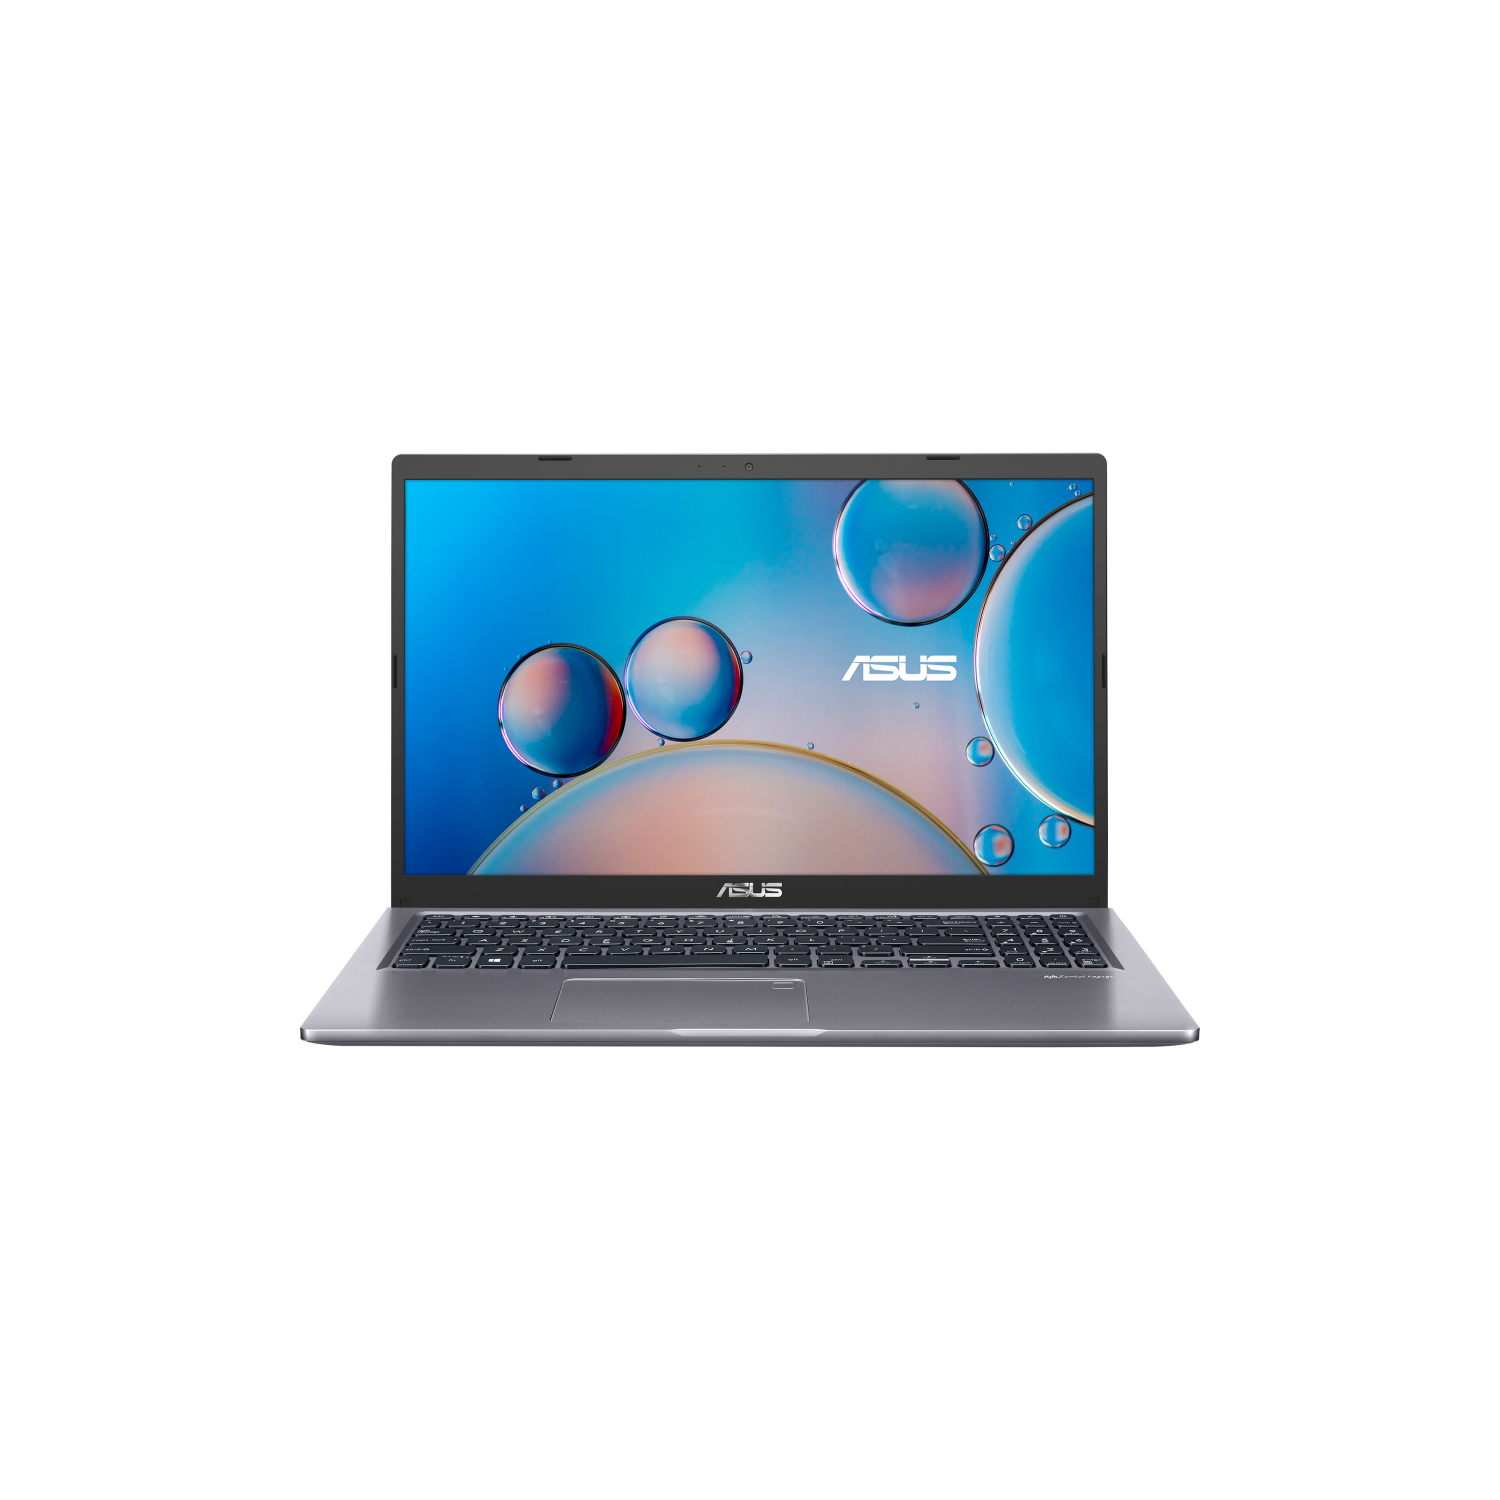 ASUS VivoBook 15 M515 Thin and Light Laptop, 15.6” HD Display, AMD Ryzen 3 3250U Processor, Radeon™ Graphics, 8GB DDR4 RAM, 128GB PCIe SSD, M515DA-DS31-CA